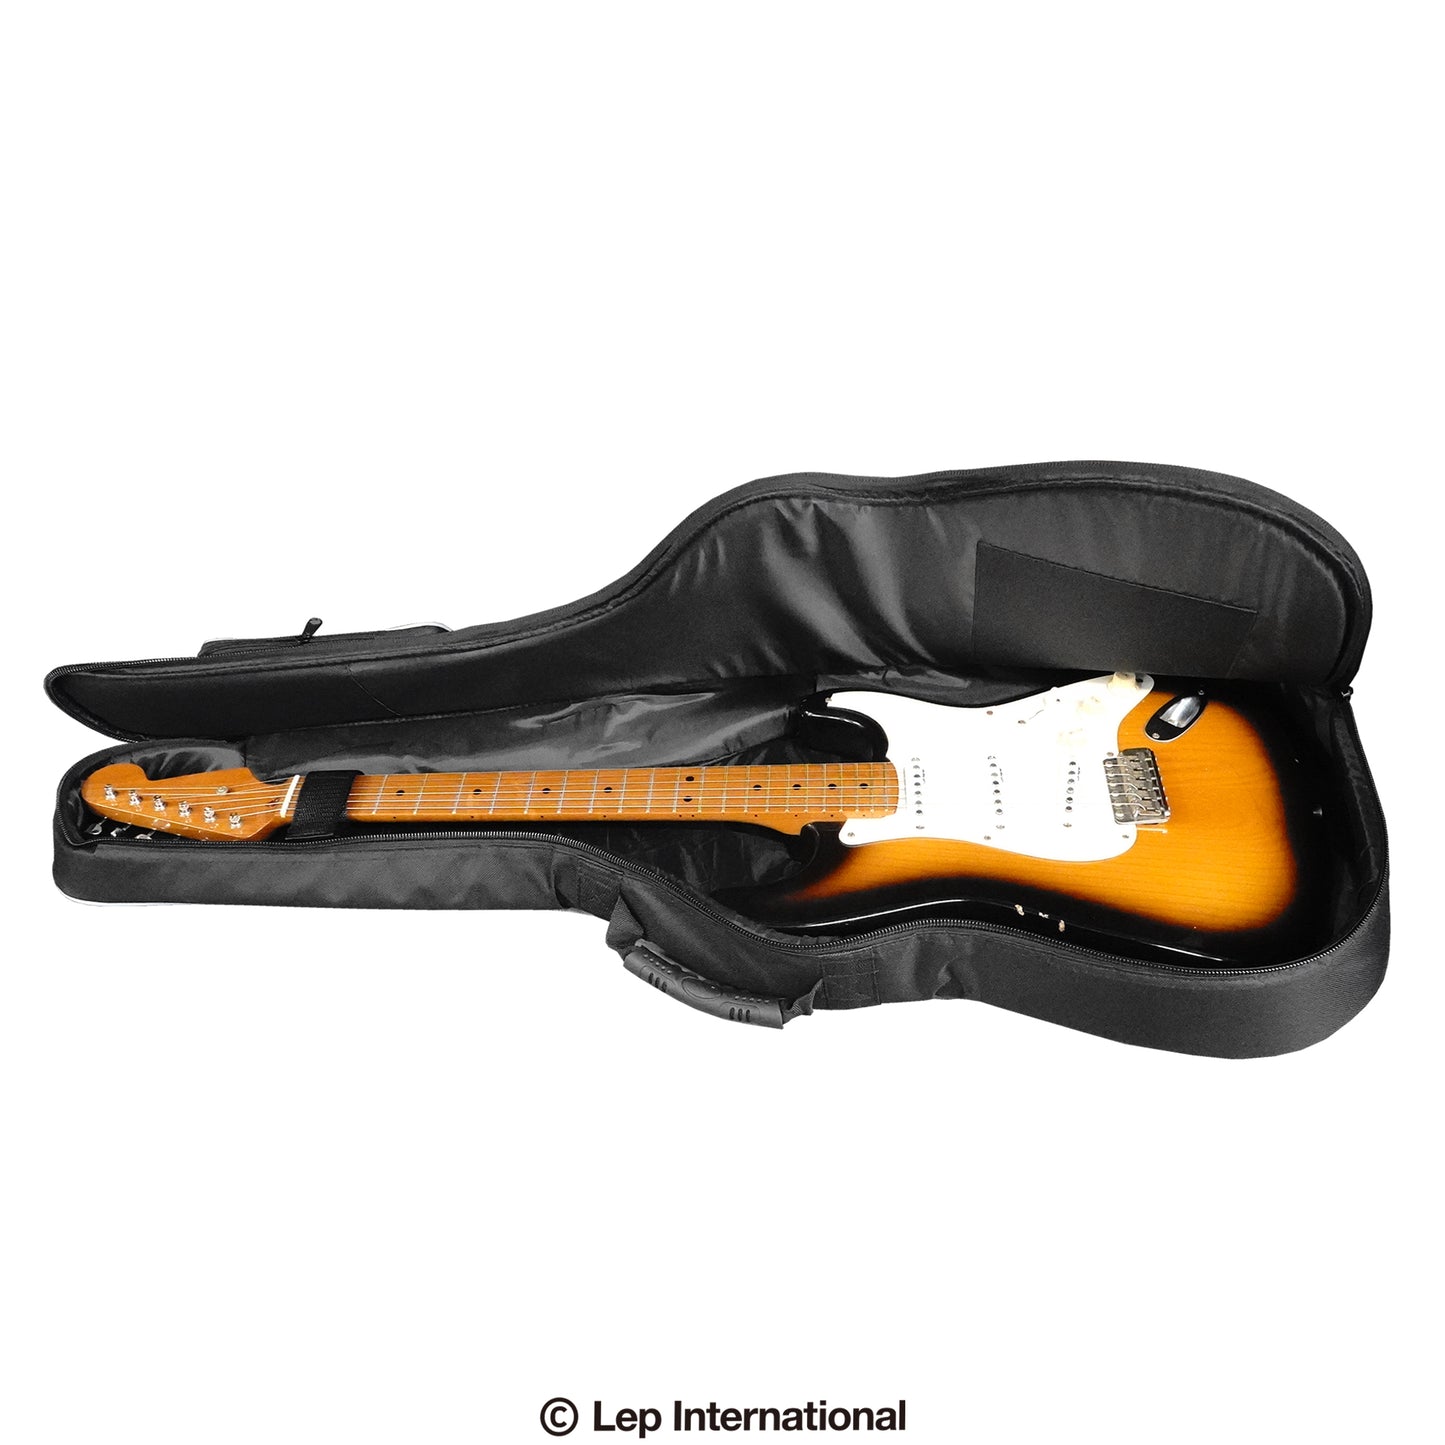 Kavaborg　MB4105E(Electric) Black 軽量エレキギター用ギグバッグ  / ギターケース リュックタイプ